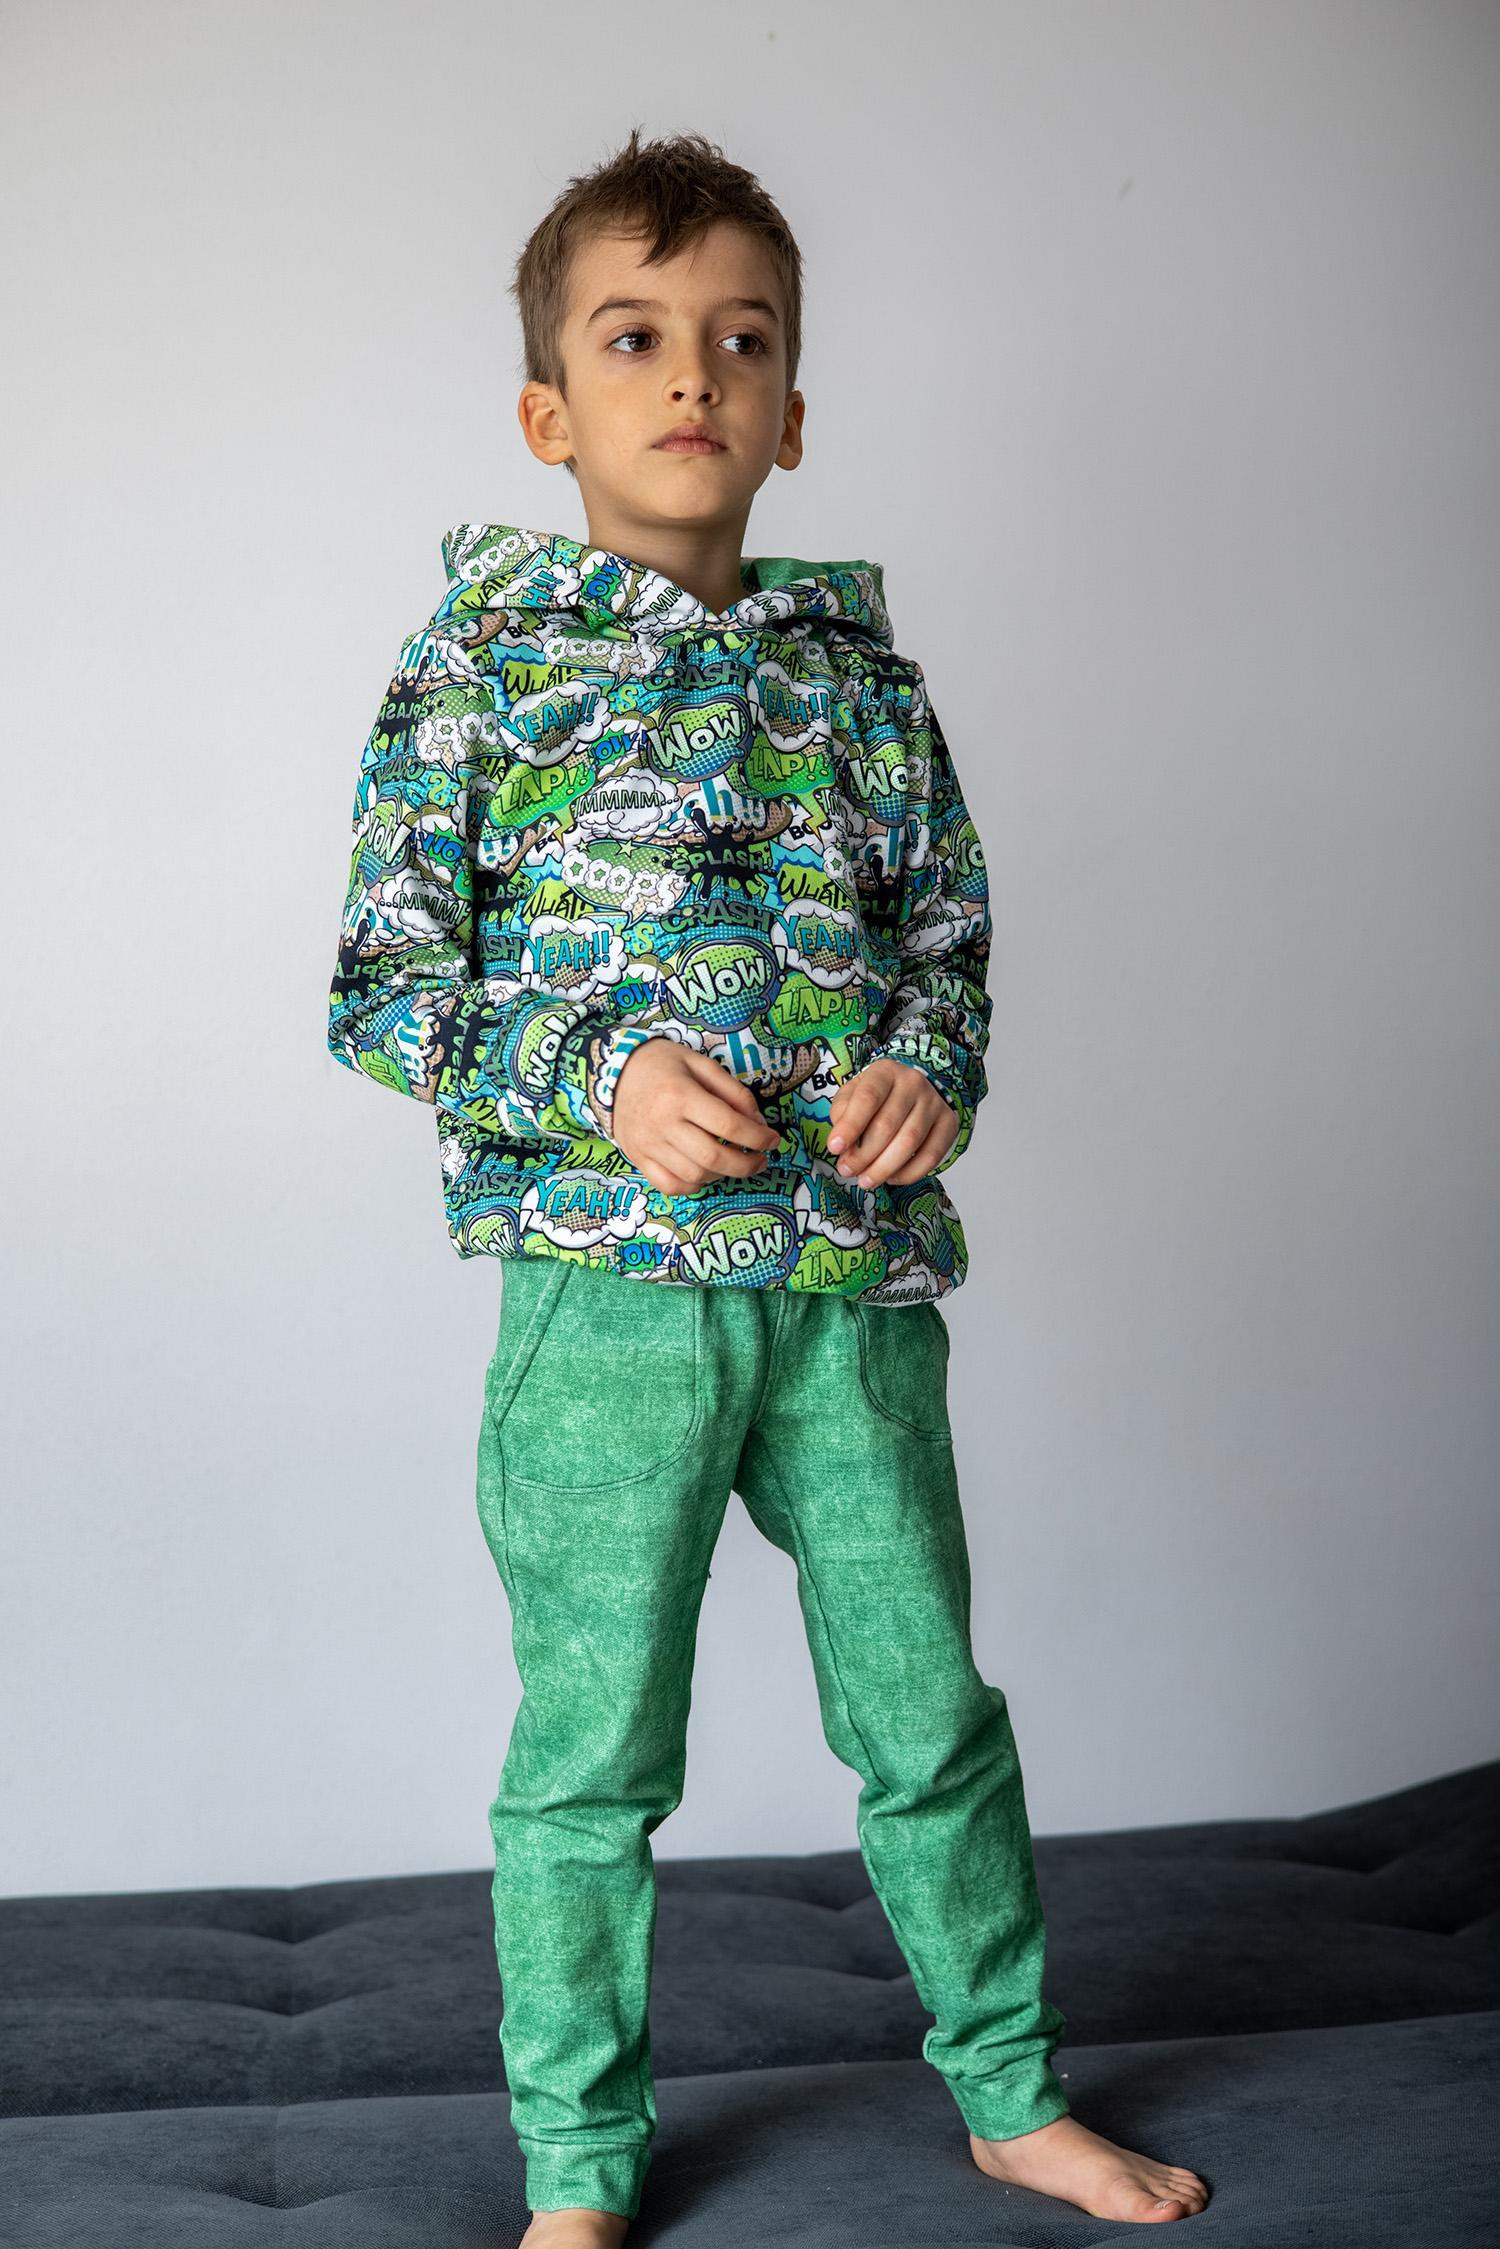 CHILDREN'S JOGGERS (LYON) - M-01 melange light grey - looped knit fabric 